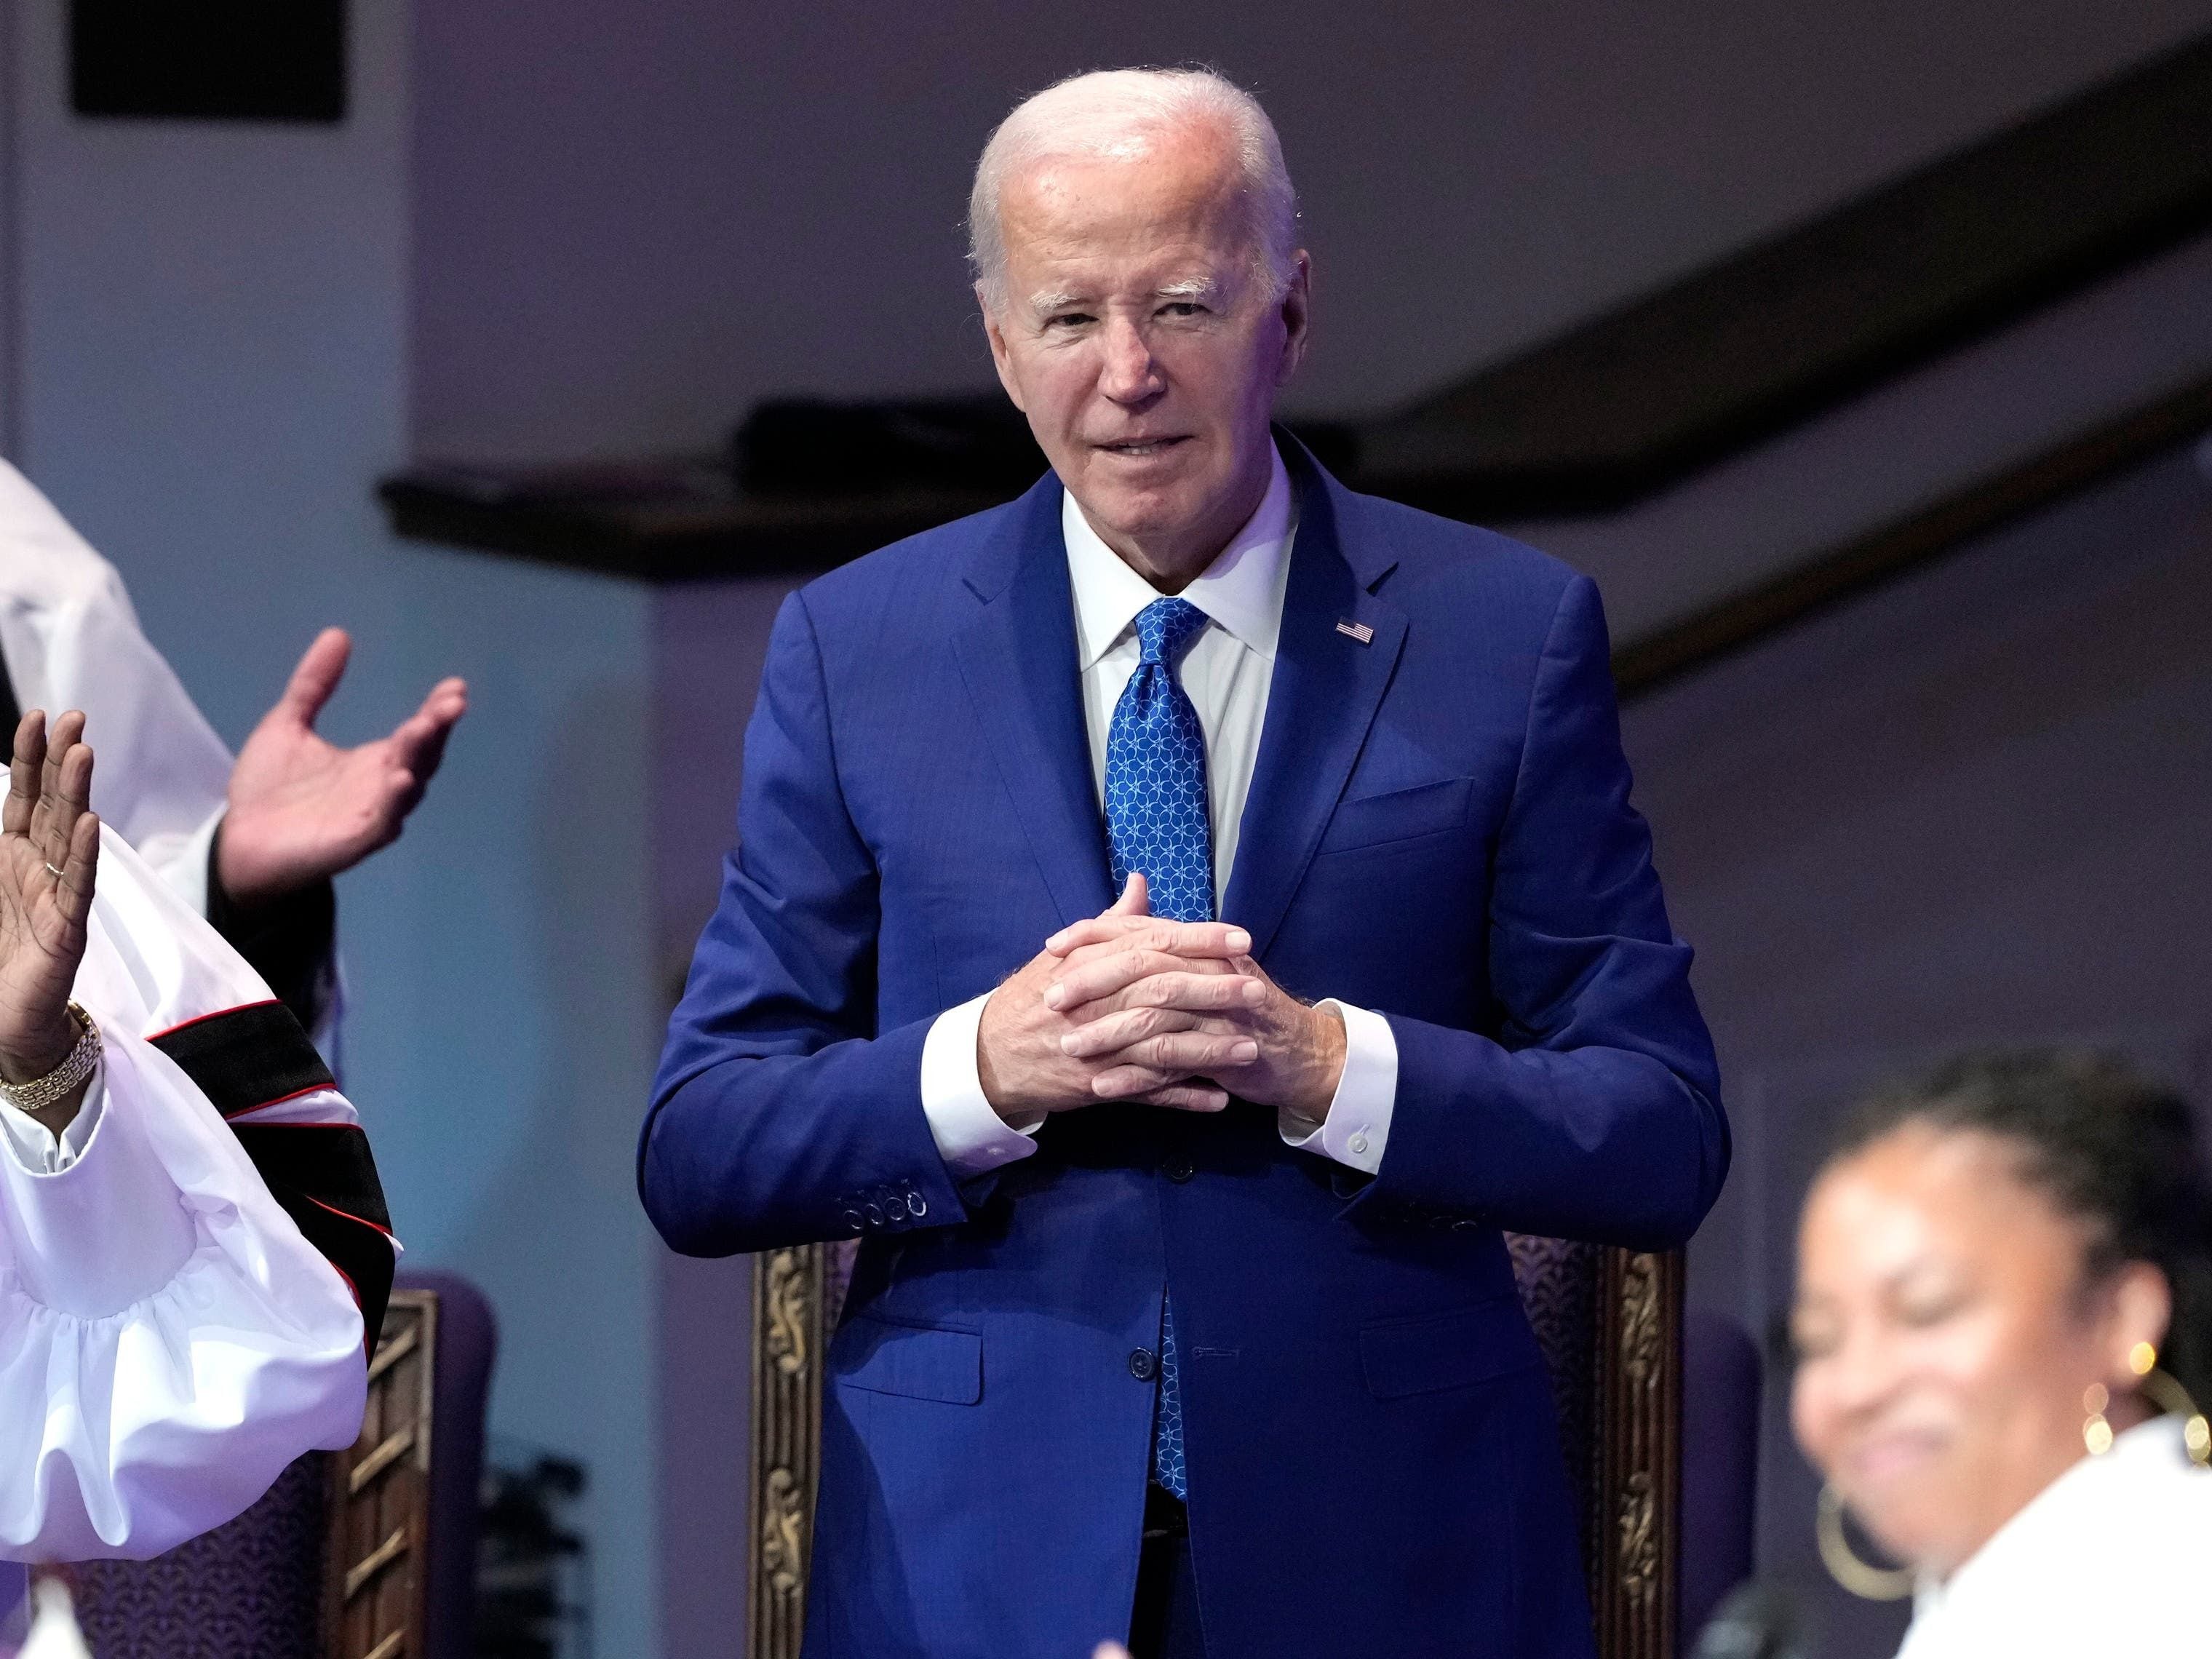 Seventh senior Democrat suggests Biden should step aside in White House race